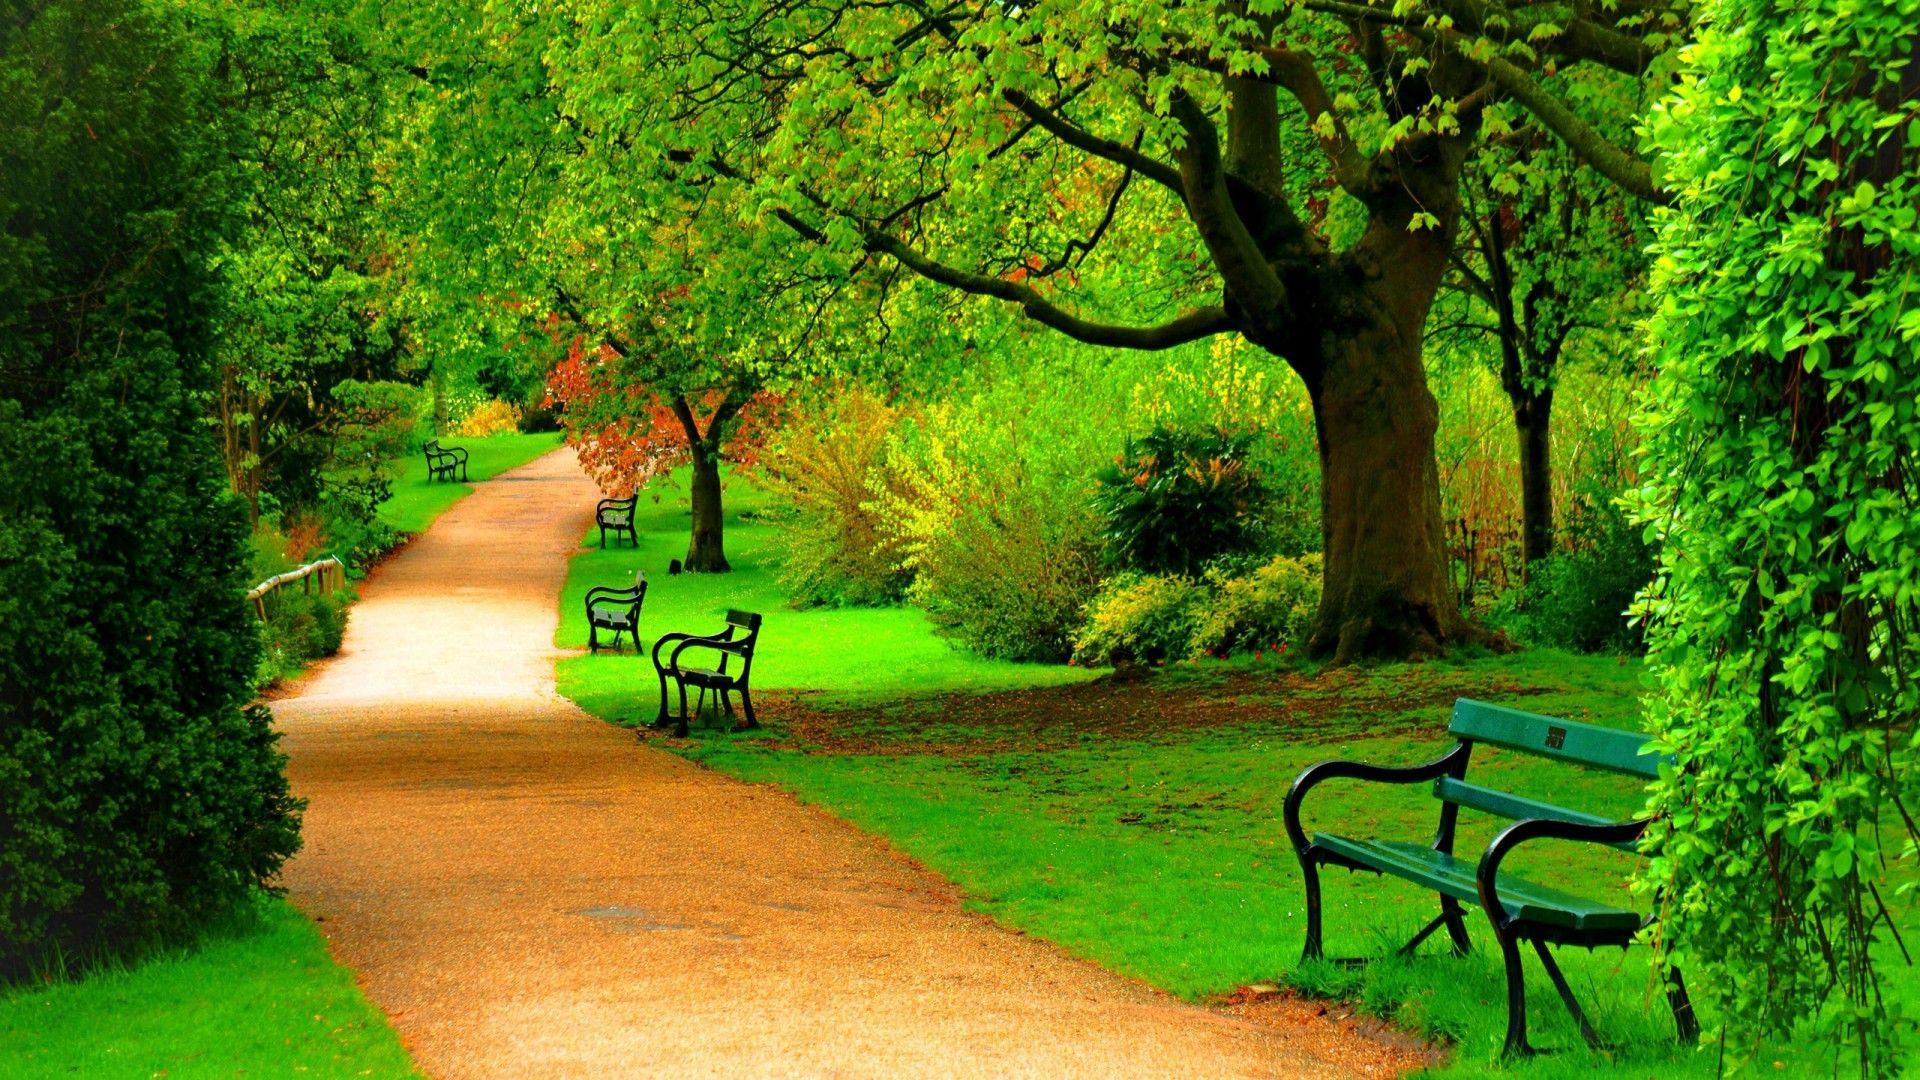 Green Park Background Images Download - IMAGESEE